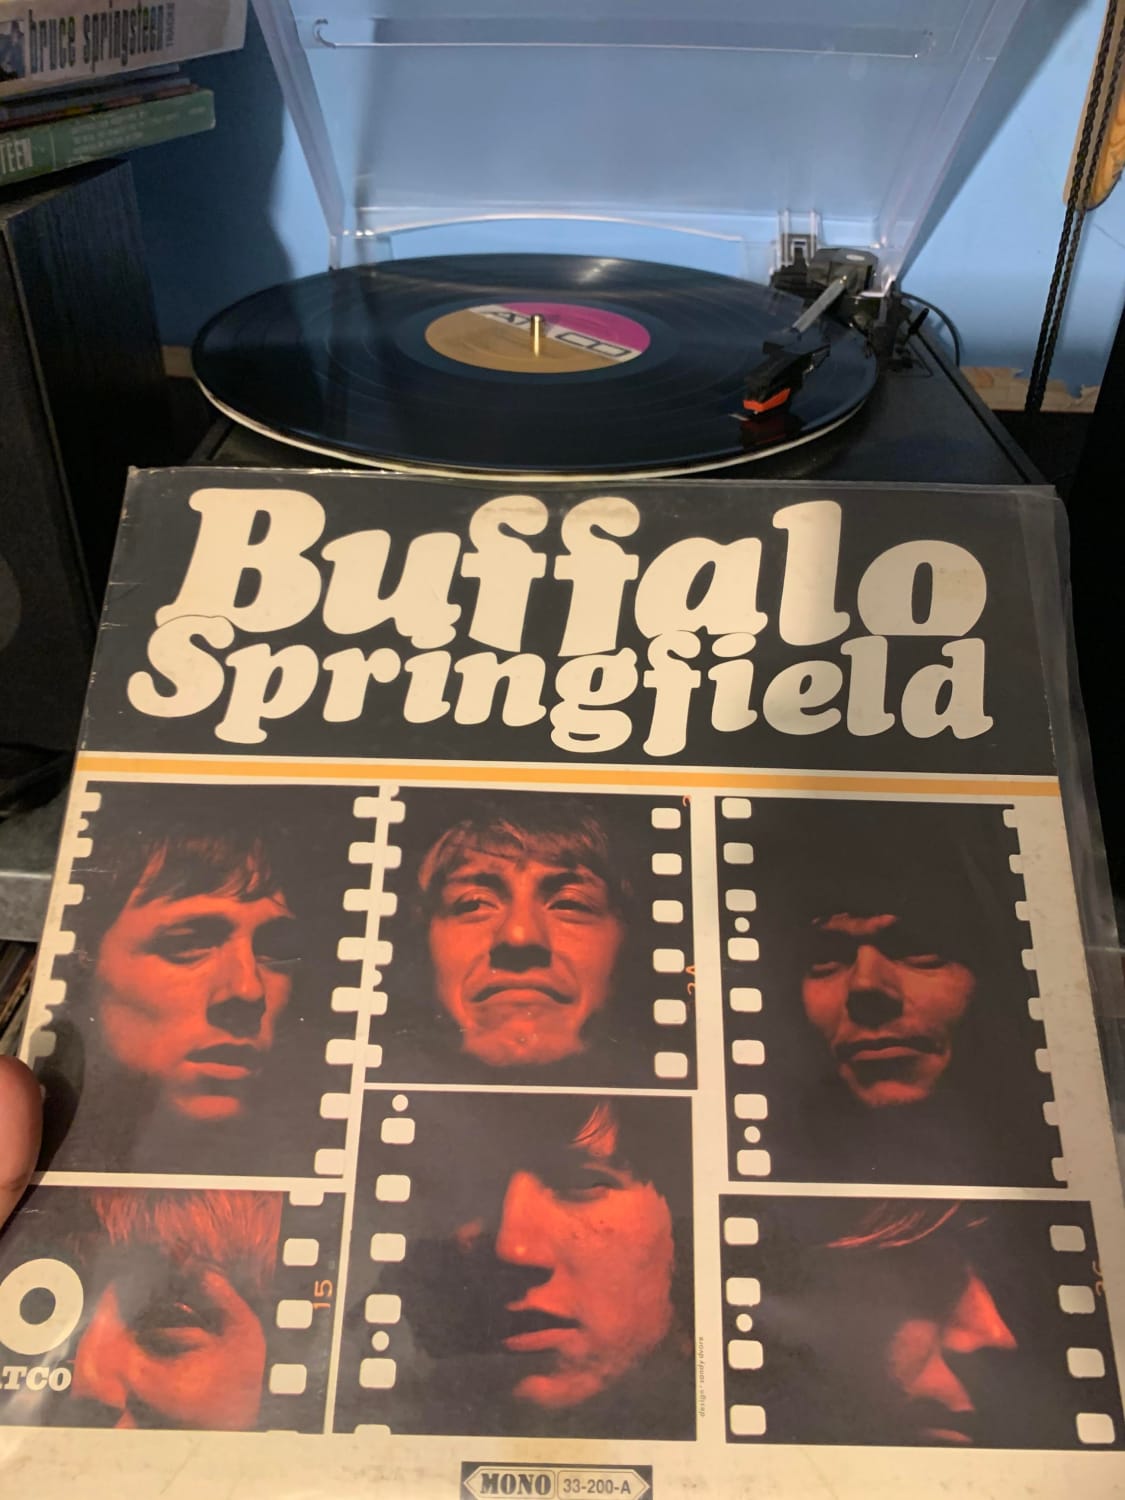 Buffalo Springfield’s first album. 1966 Mono pressing.